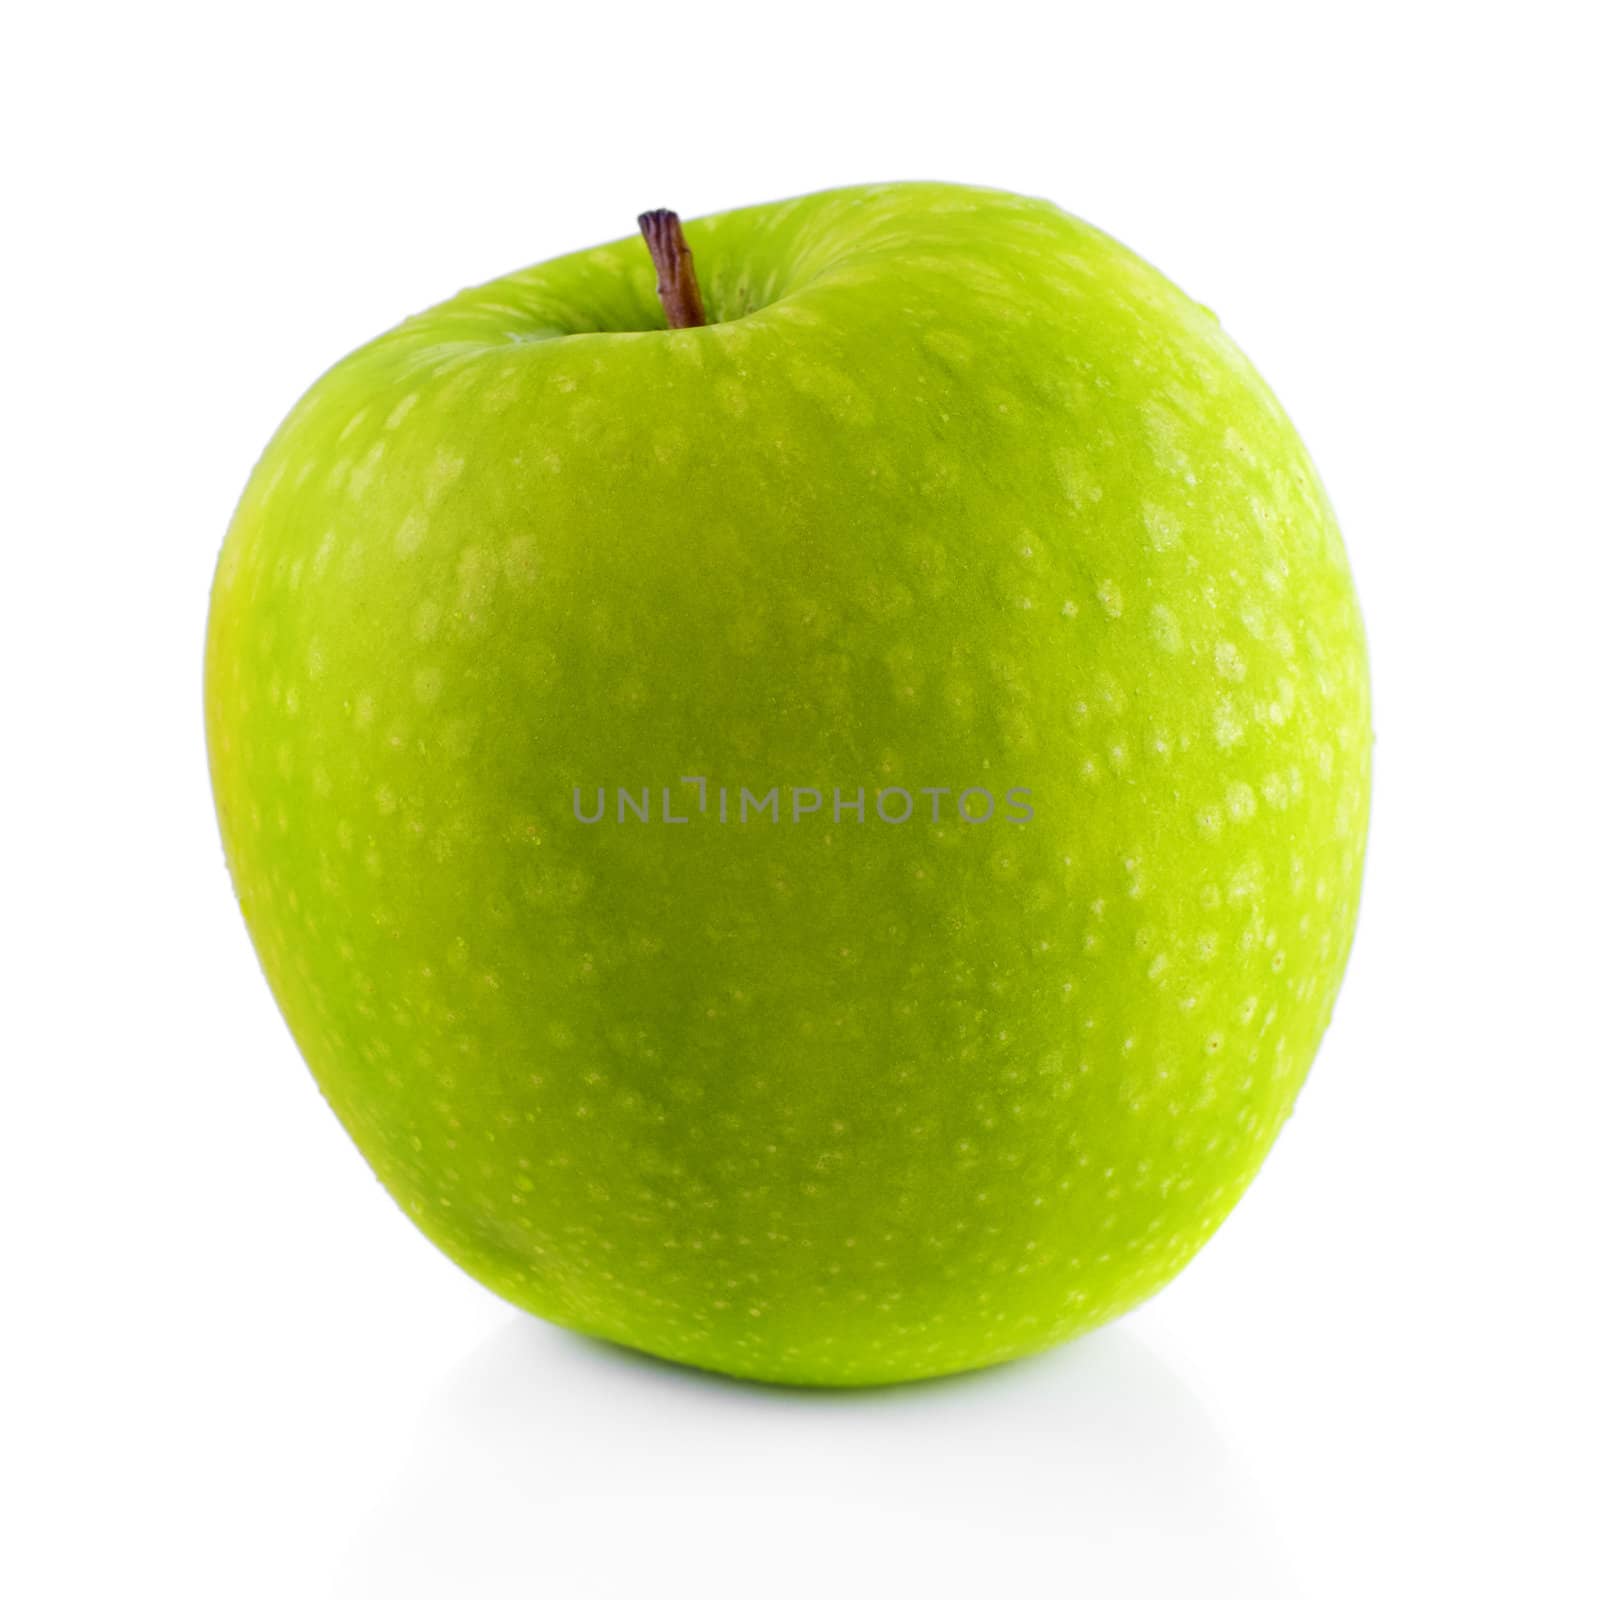 Granny Smith apple on white background